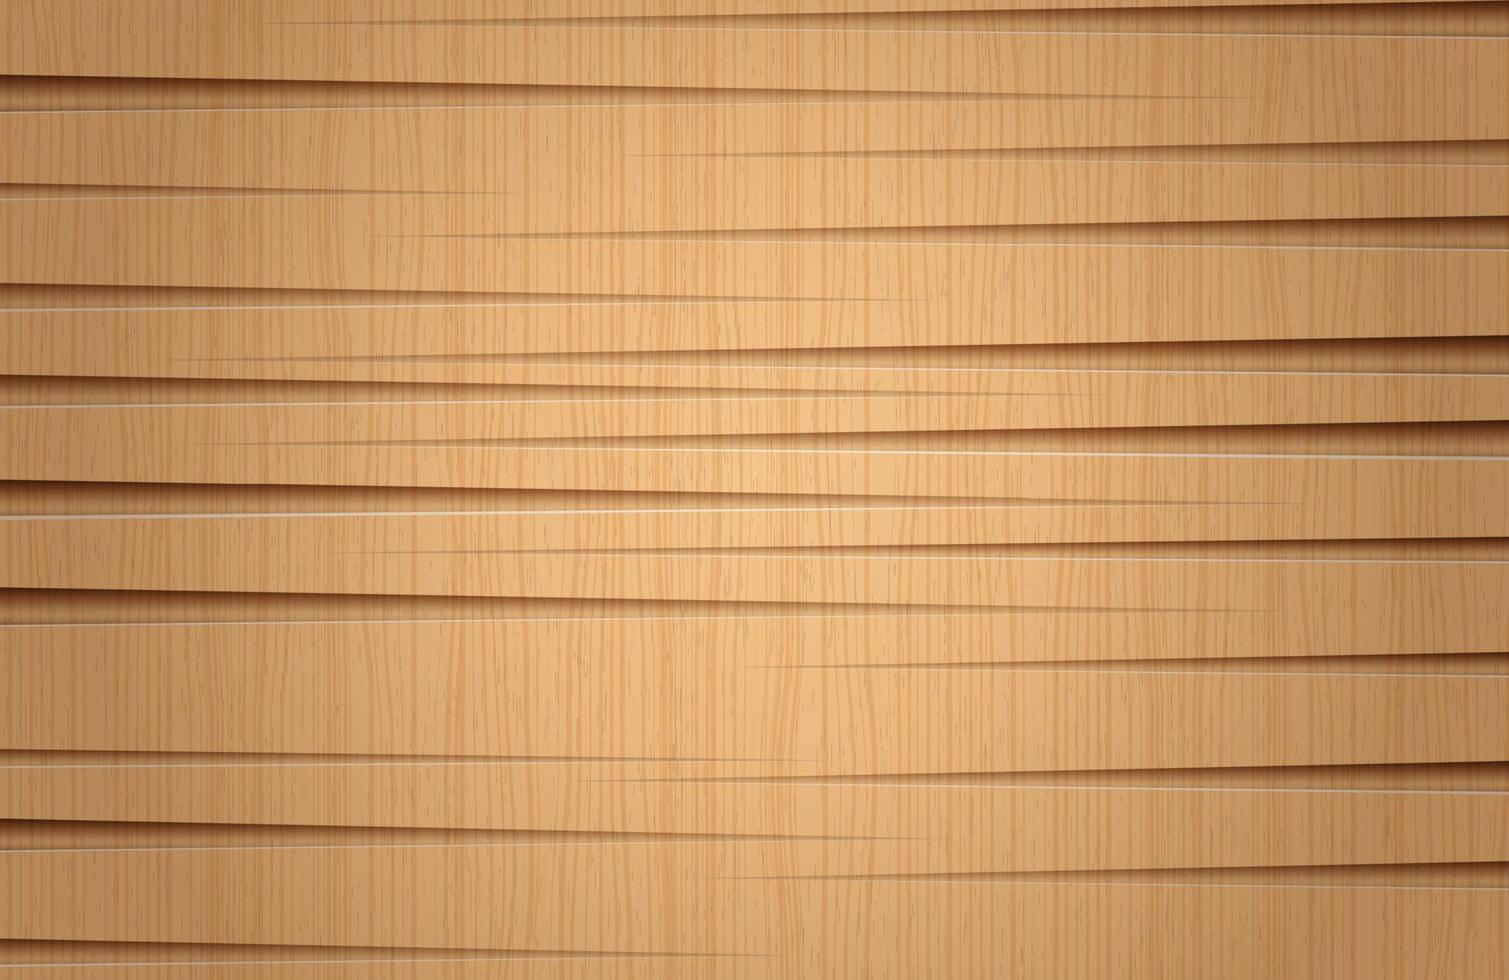 Wooden texture background.Vector illustration vector